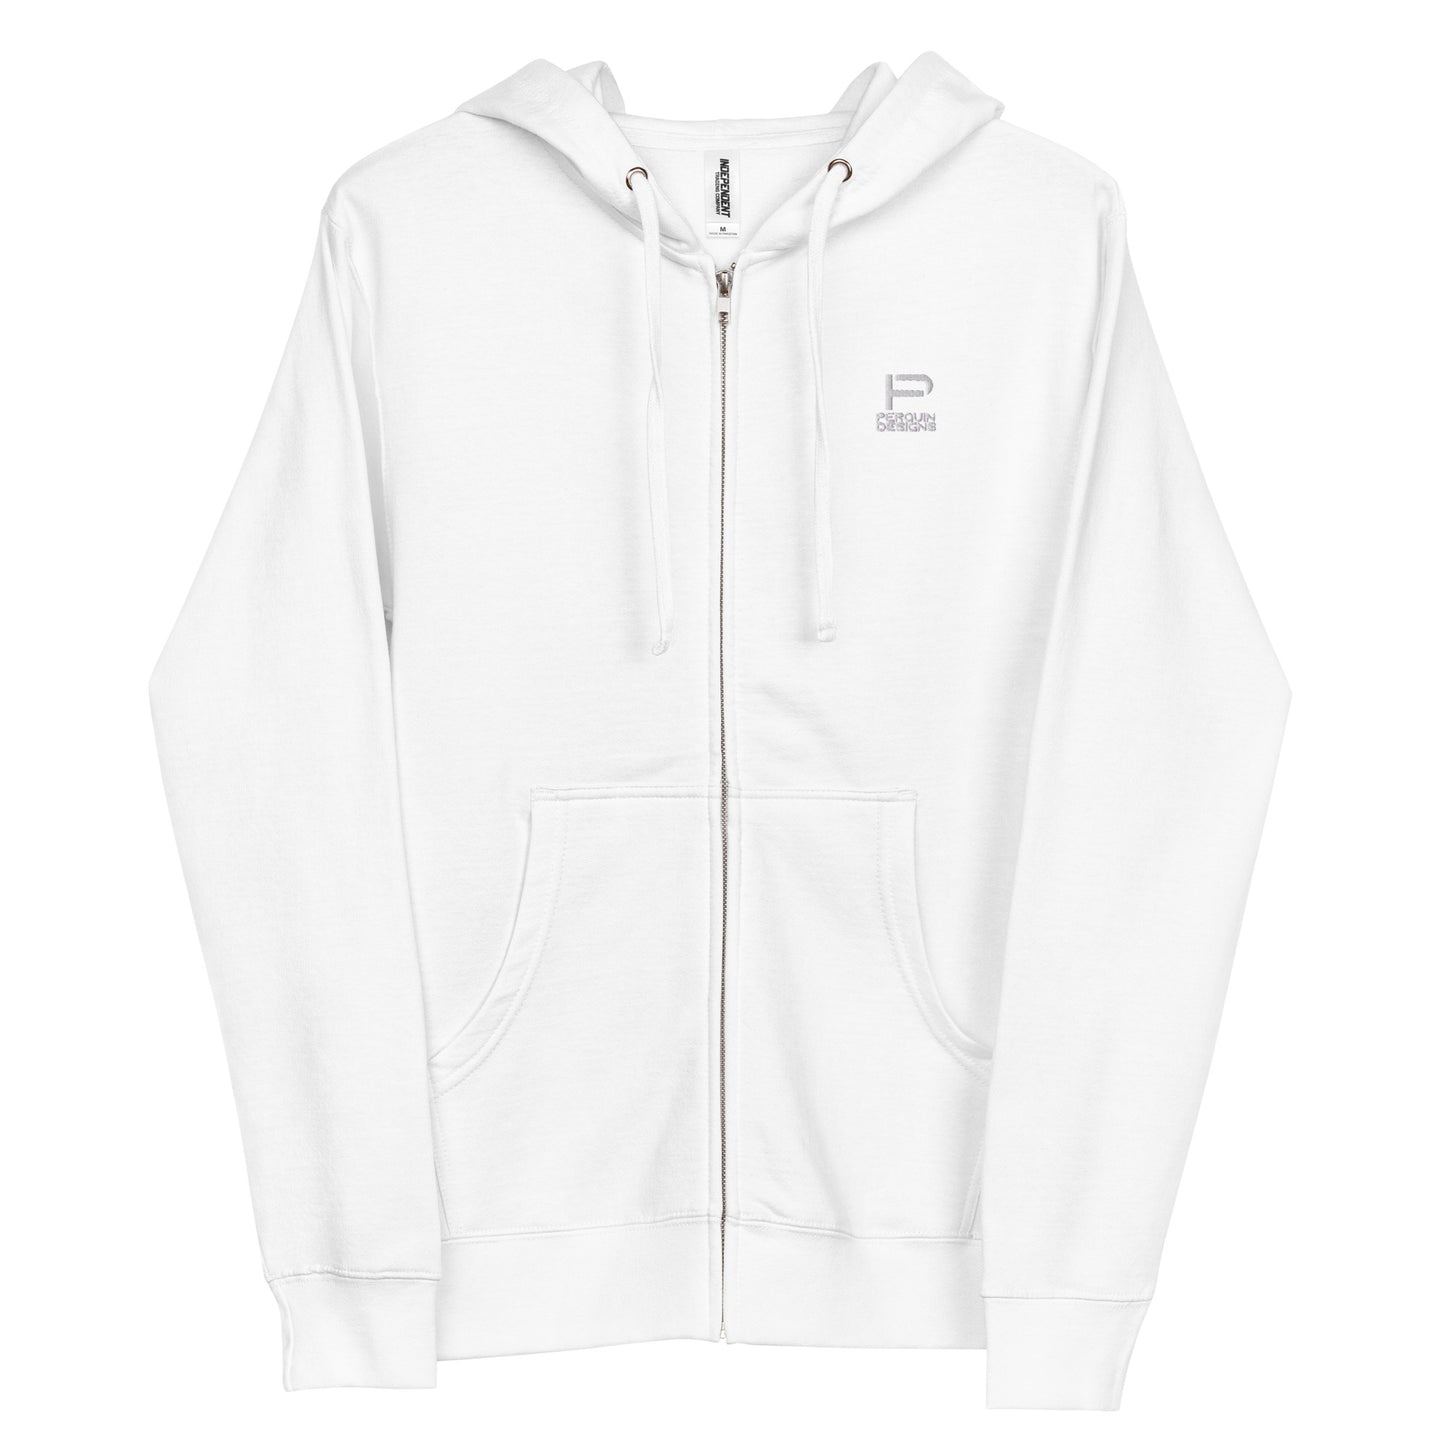 Perquin Designs Classic PD White Logo fleece zip up Hoodie